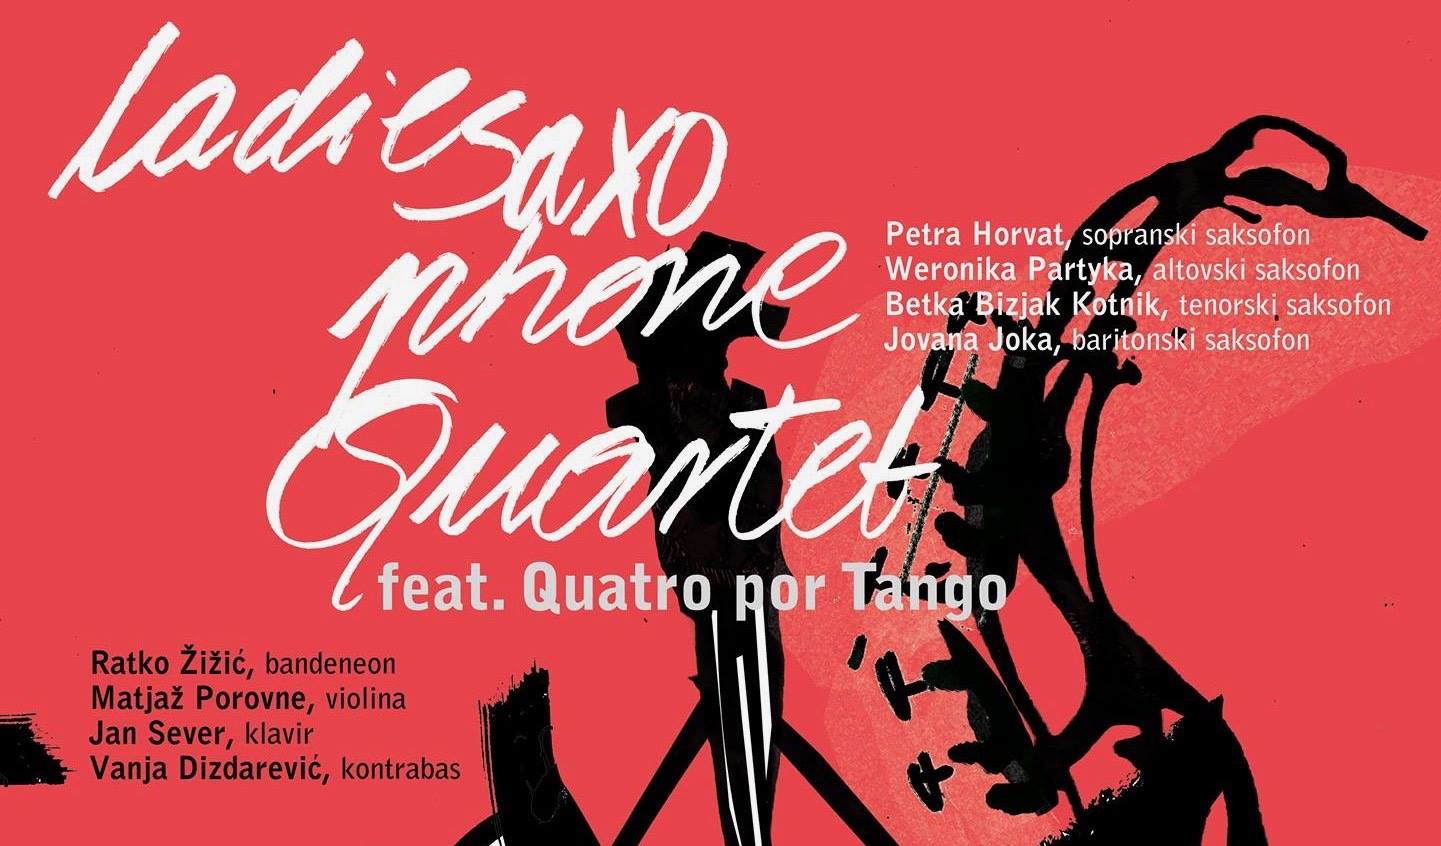 LadieS goes Tango 05.10.2017, Kolarac, Beograd